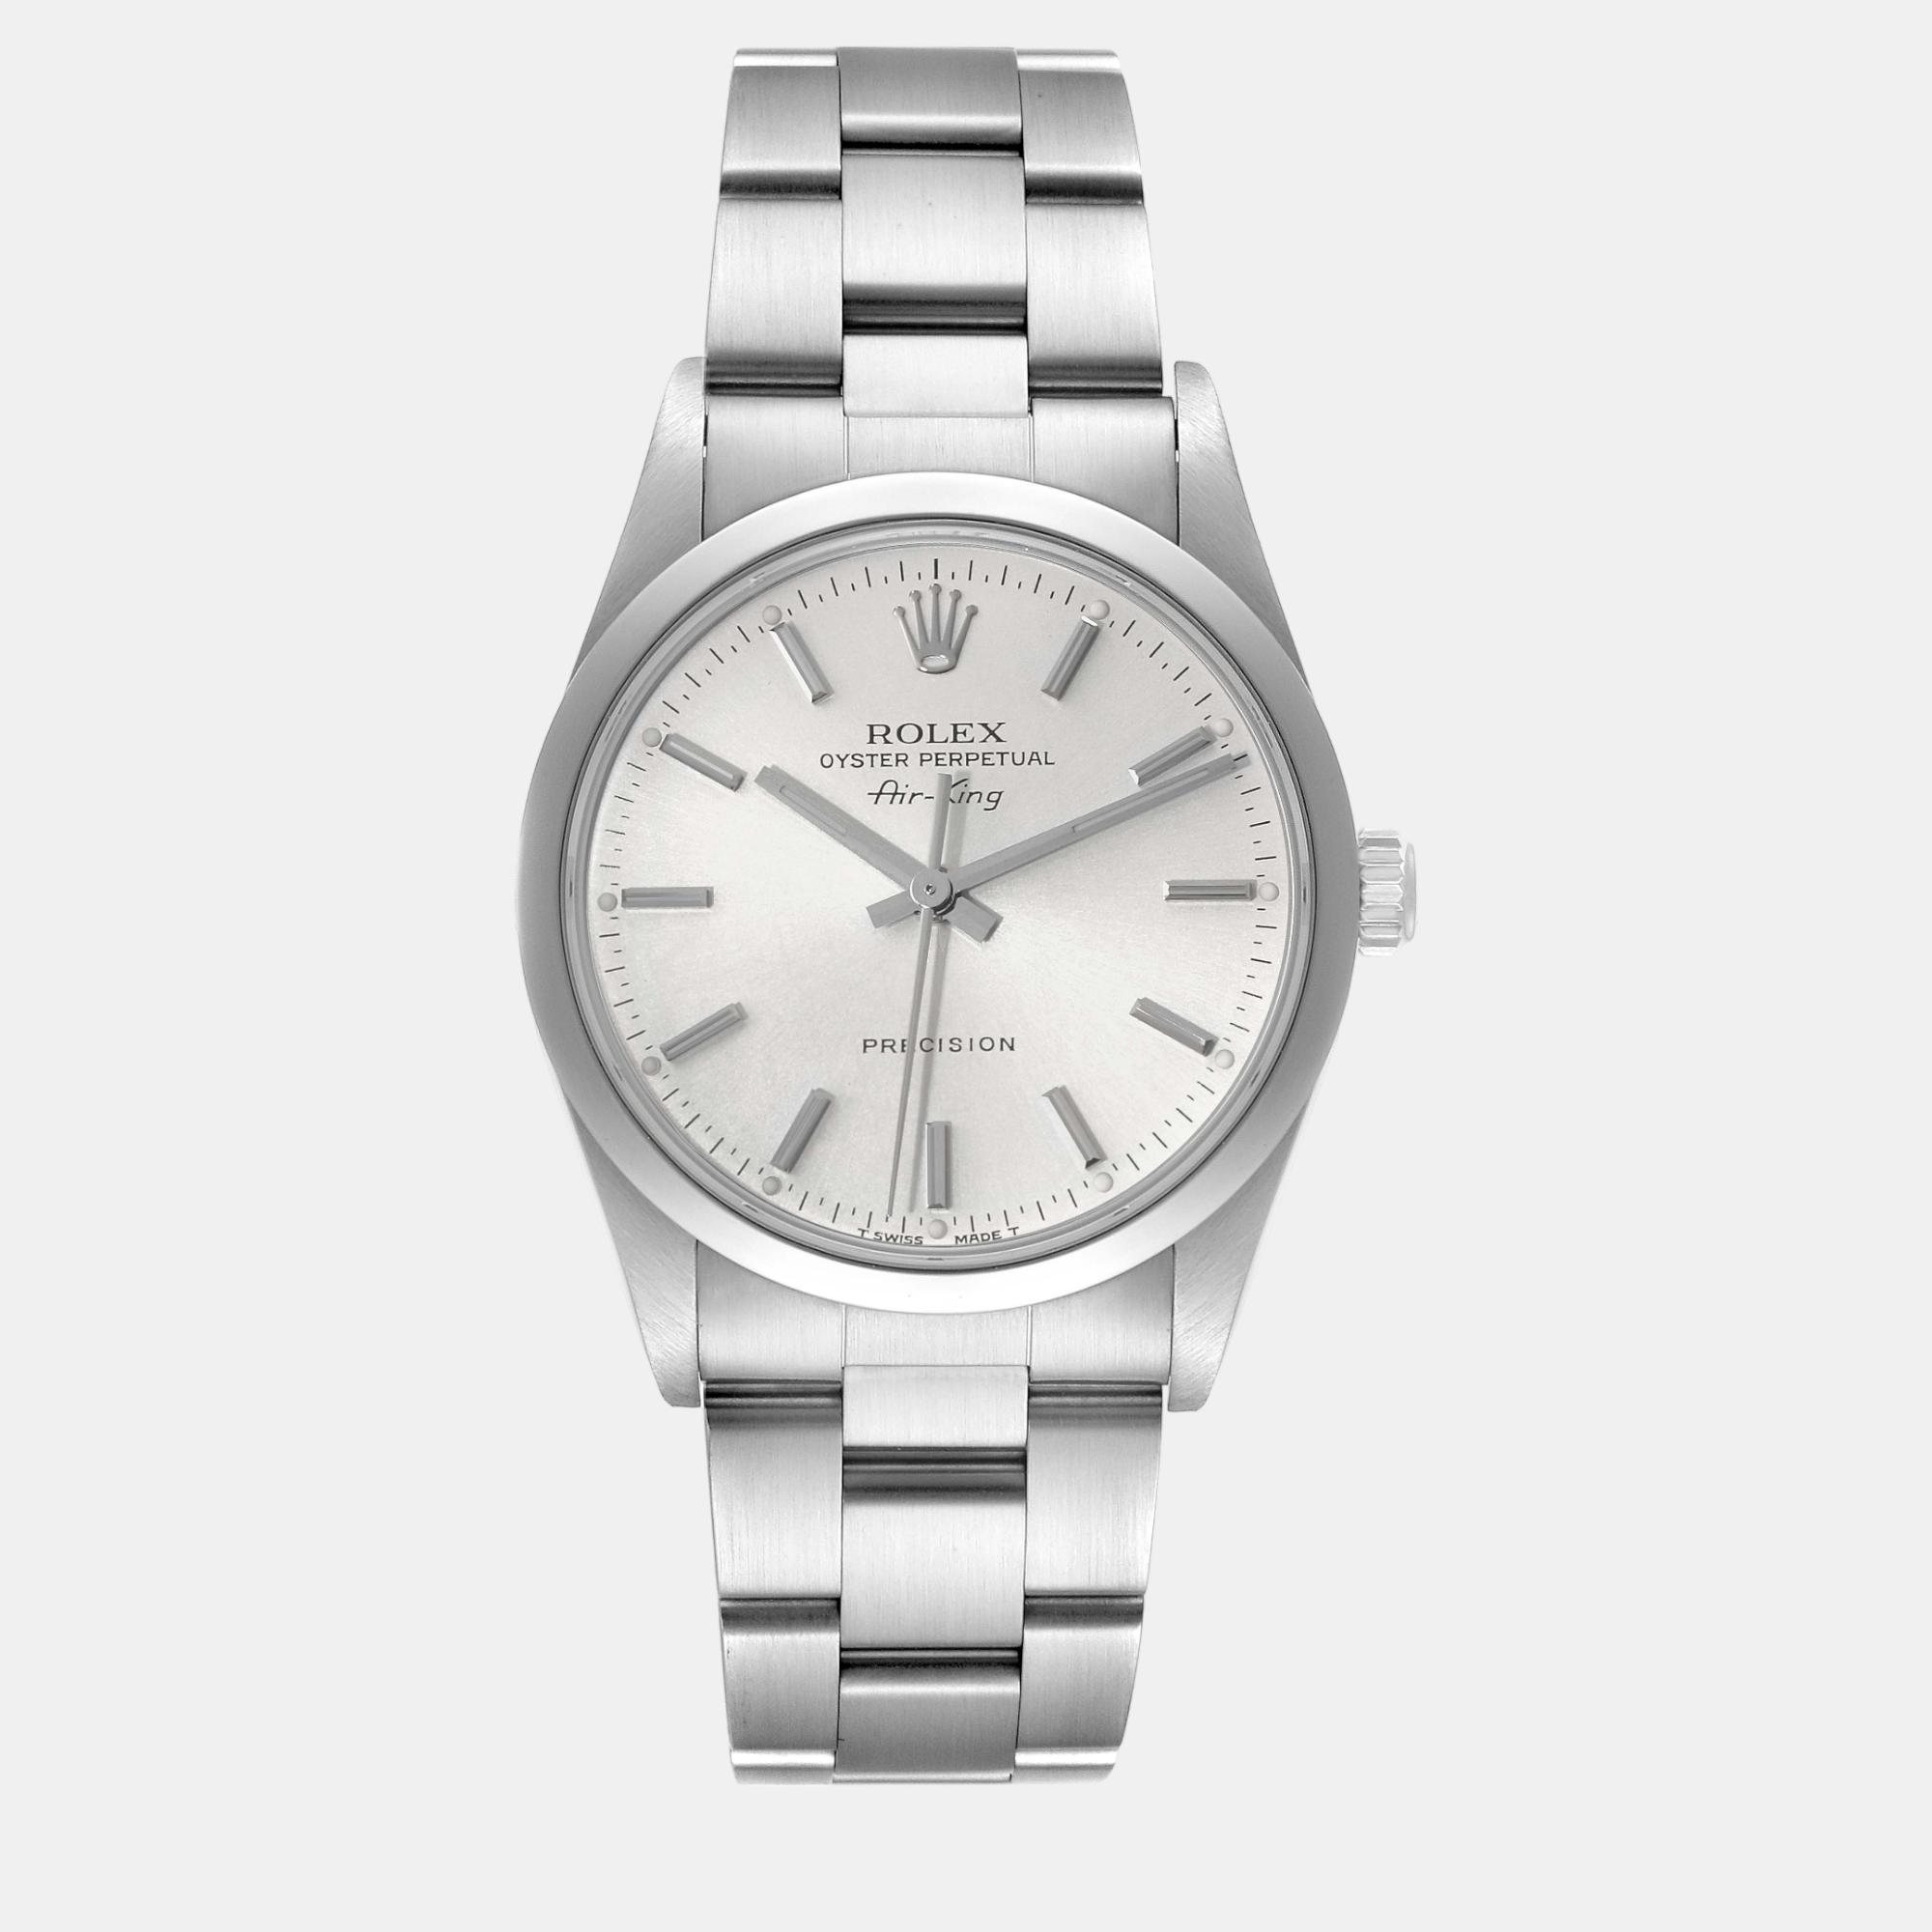 Rolex air king silver dial smooth bezel steel men's watch 34 mm